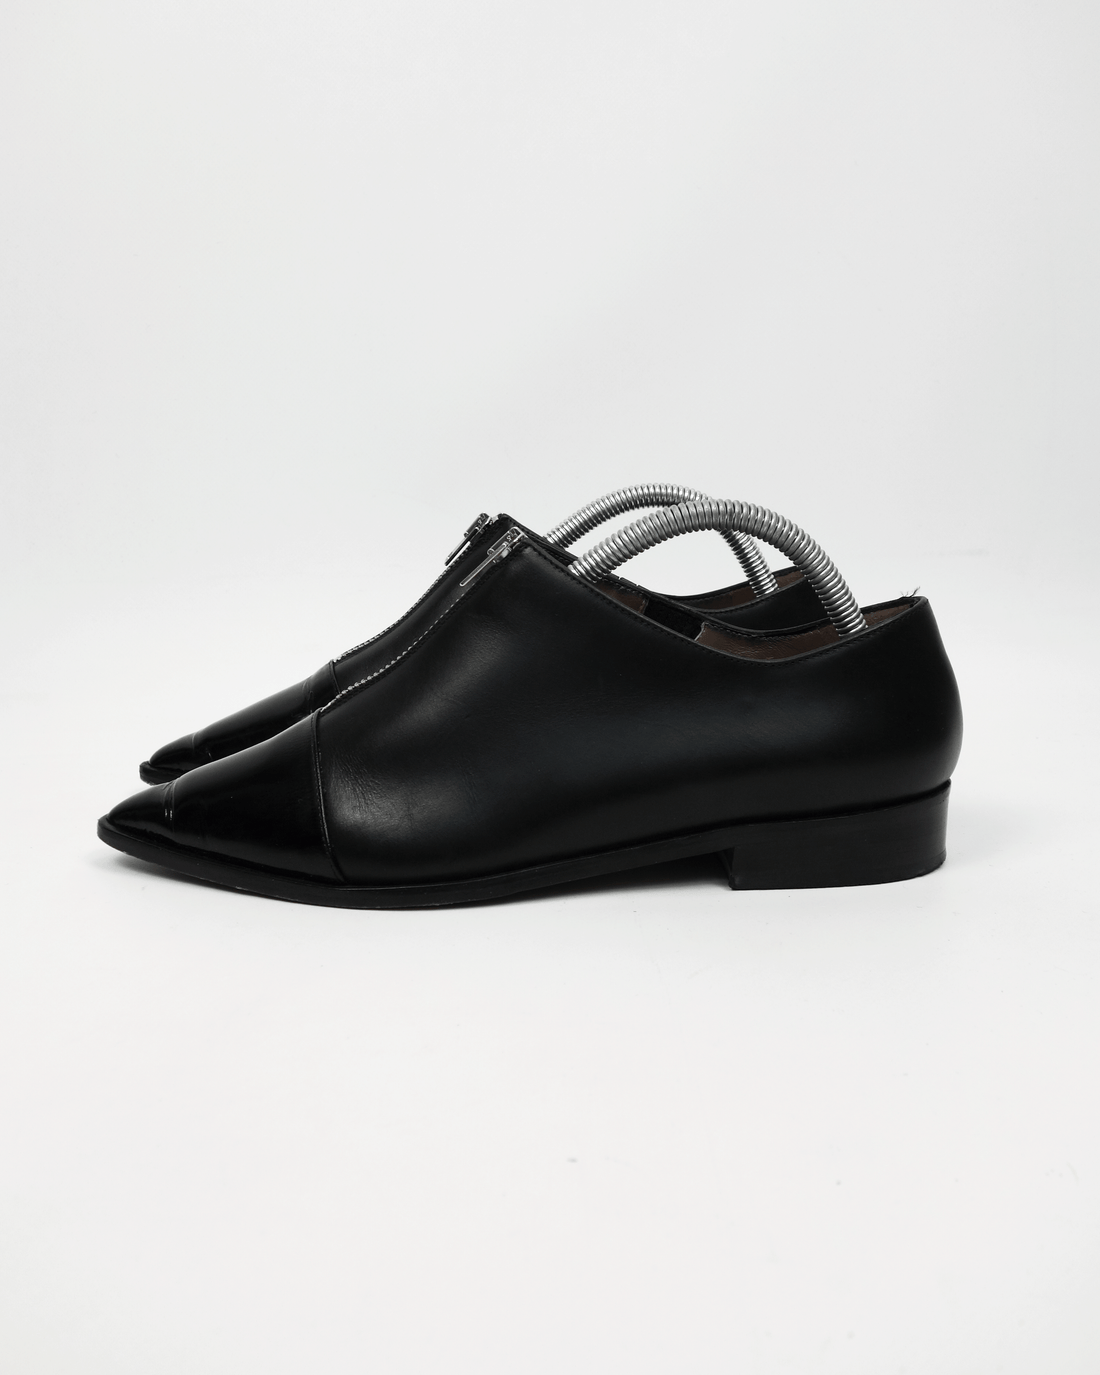 Marni Black Leather Zipped Shoes 2000's